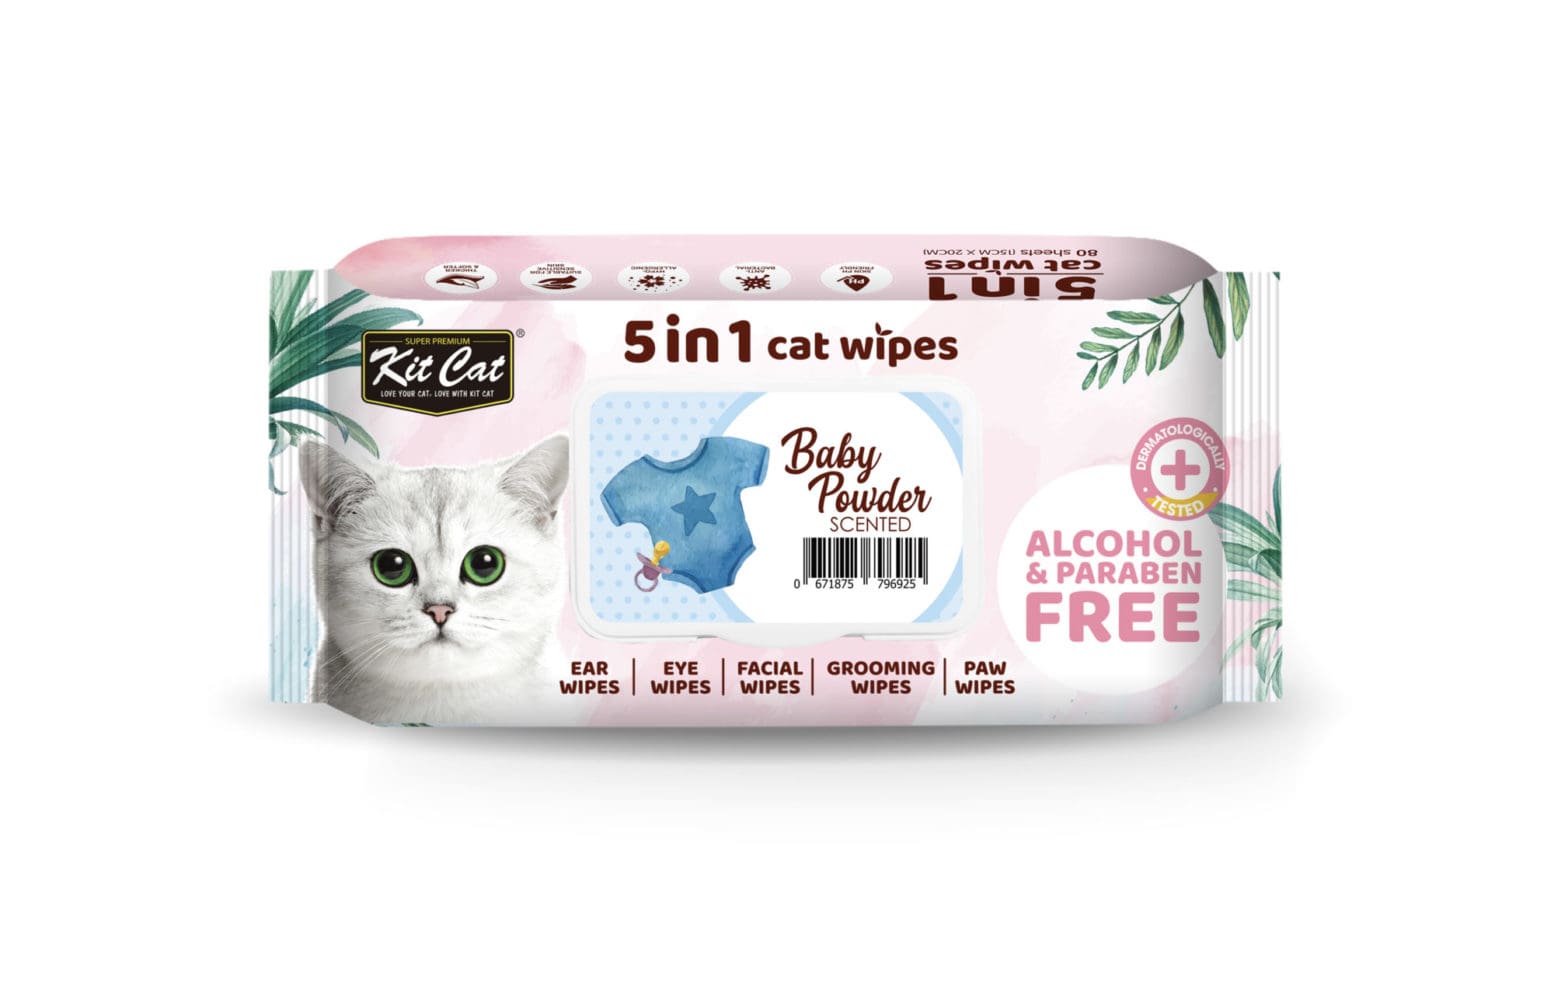 Kit Cat 5 in 1 Cat Wipes 80pcs (Baby powder)